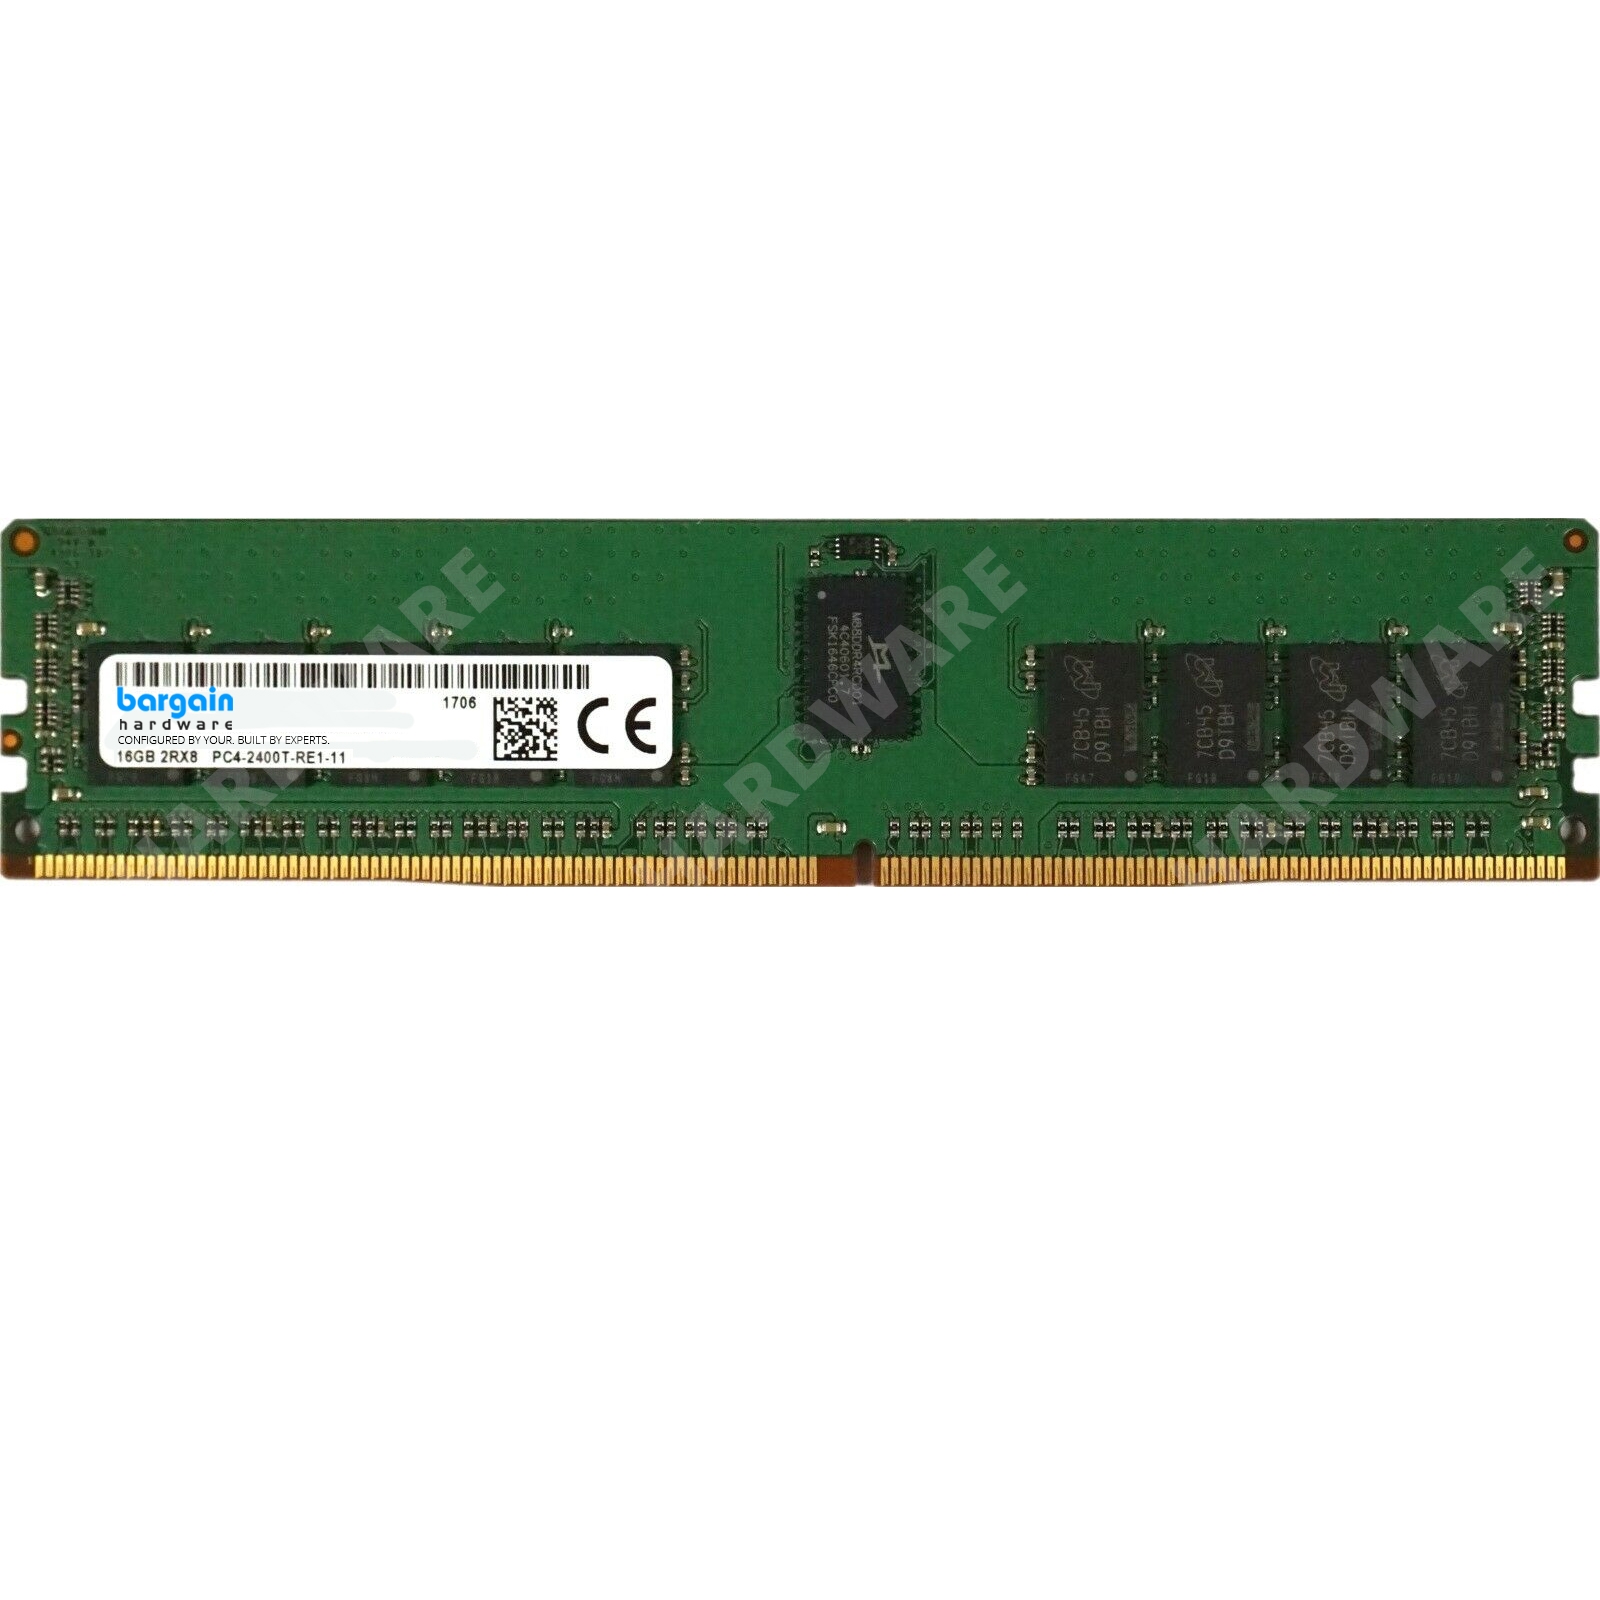 16x 16GB PC4-2400T-R DDR4 ECC Registered (2Rx8) Server RAM Memory